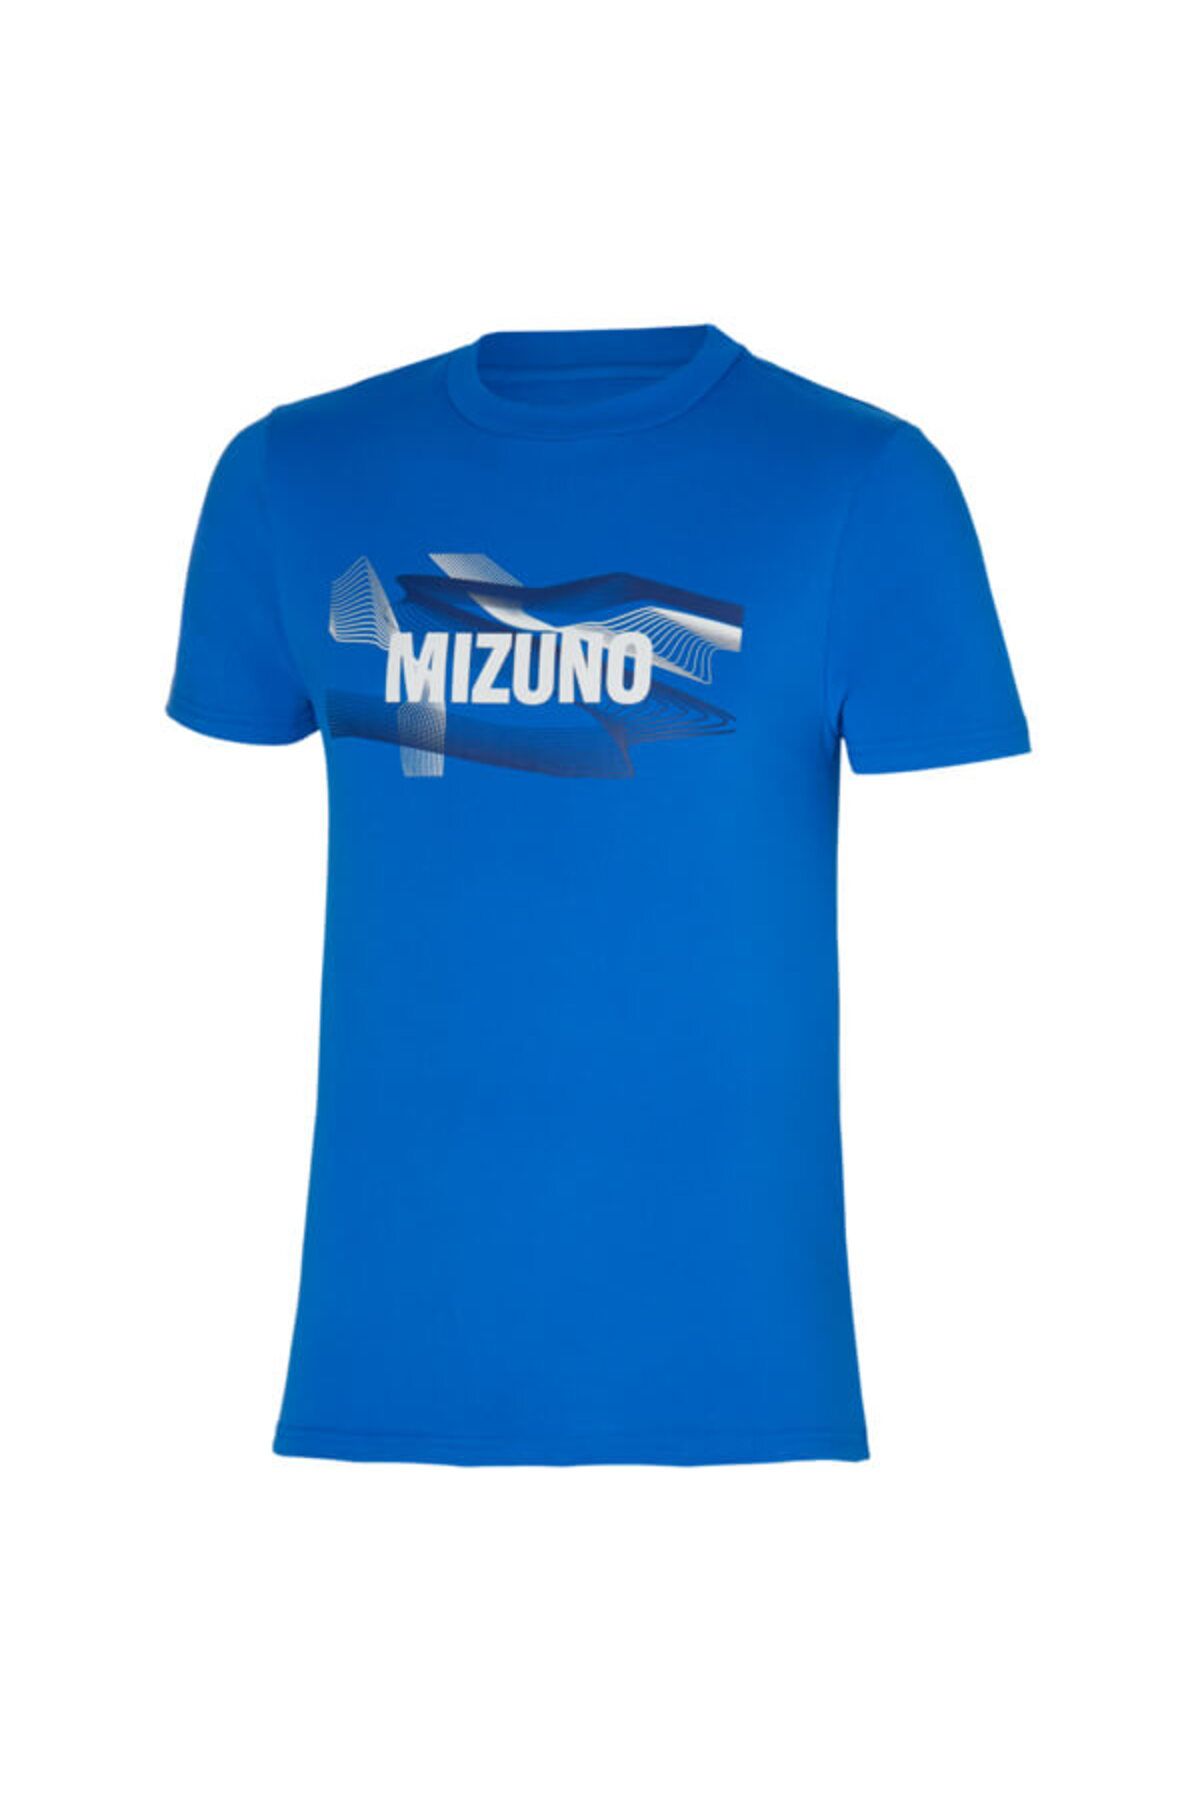 Mizuno Graphic Erkek Tişört Mavi